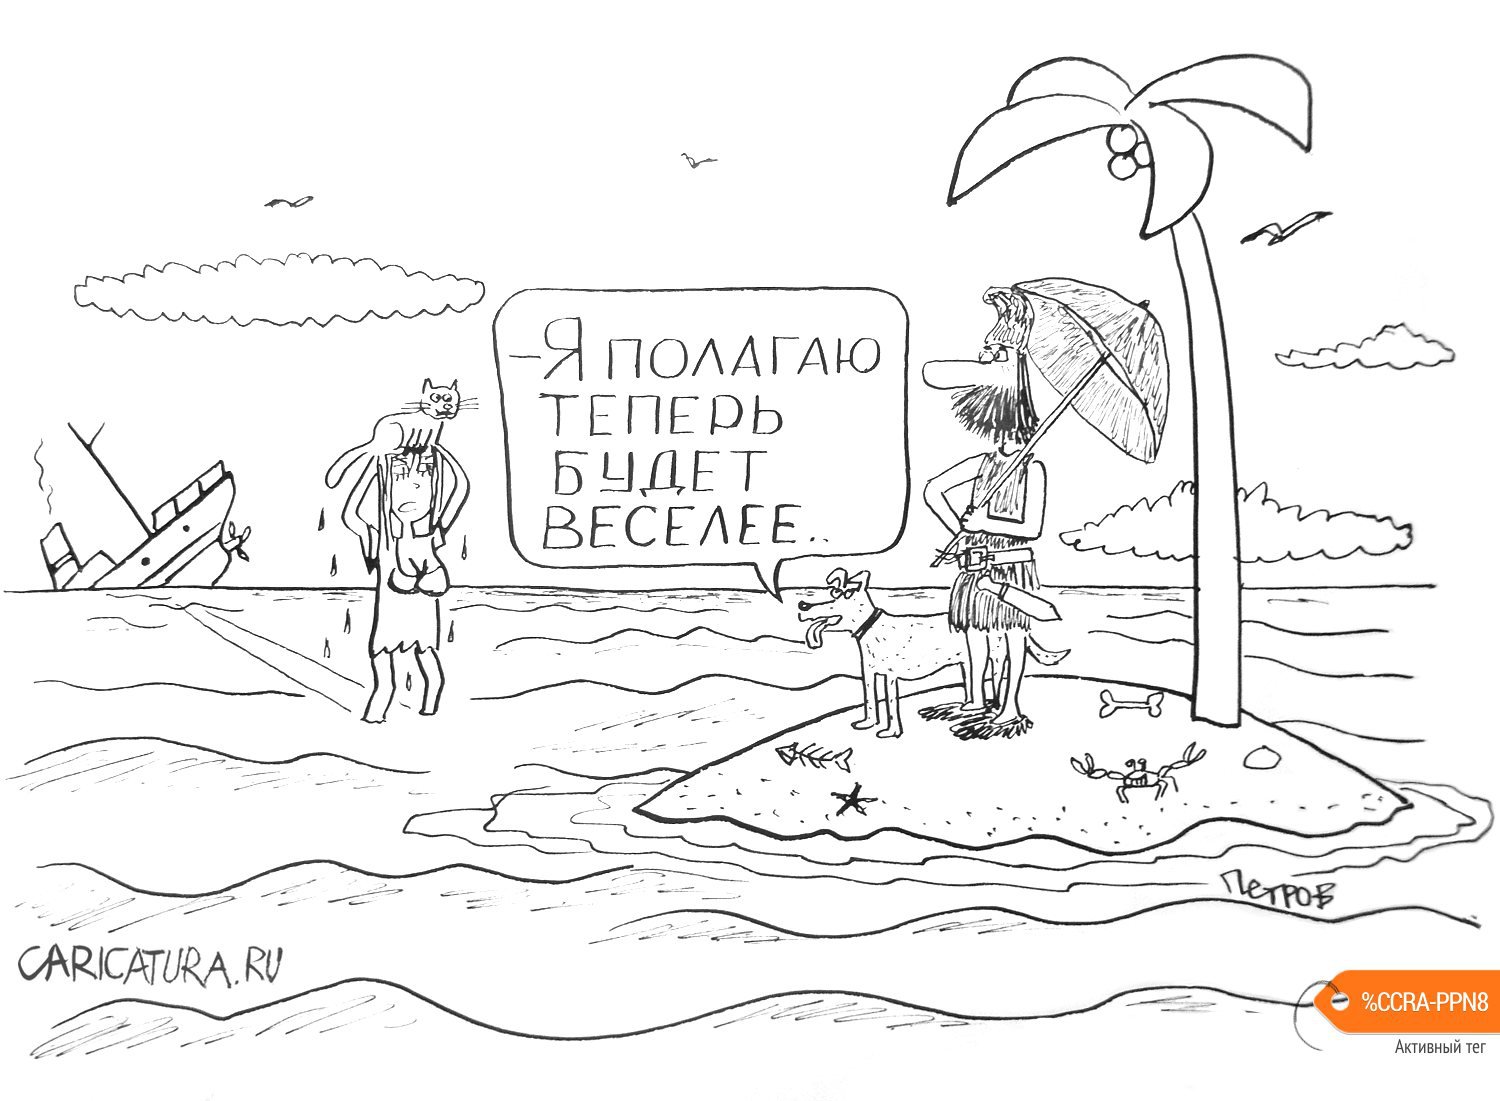 Карикатура "Робинзон", Александр Петров